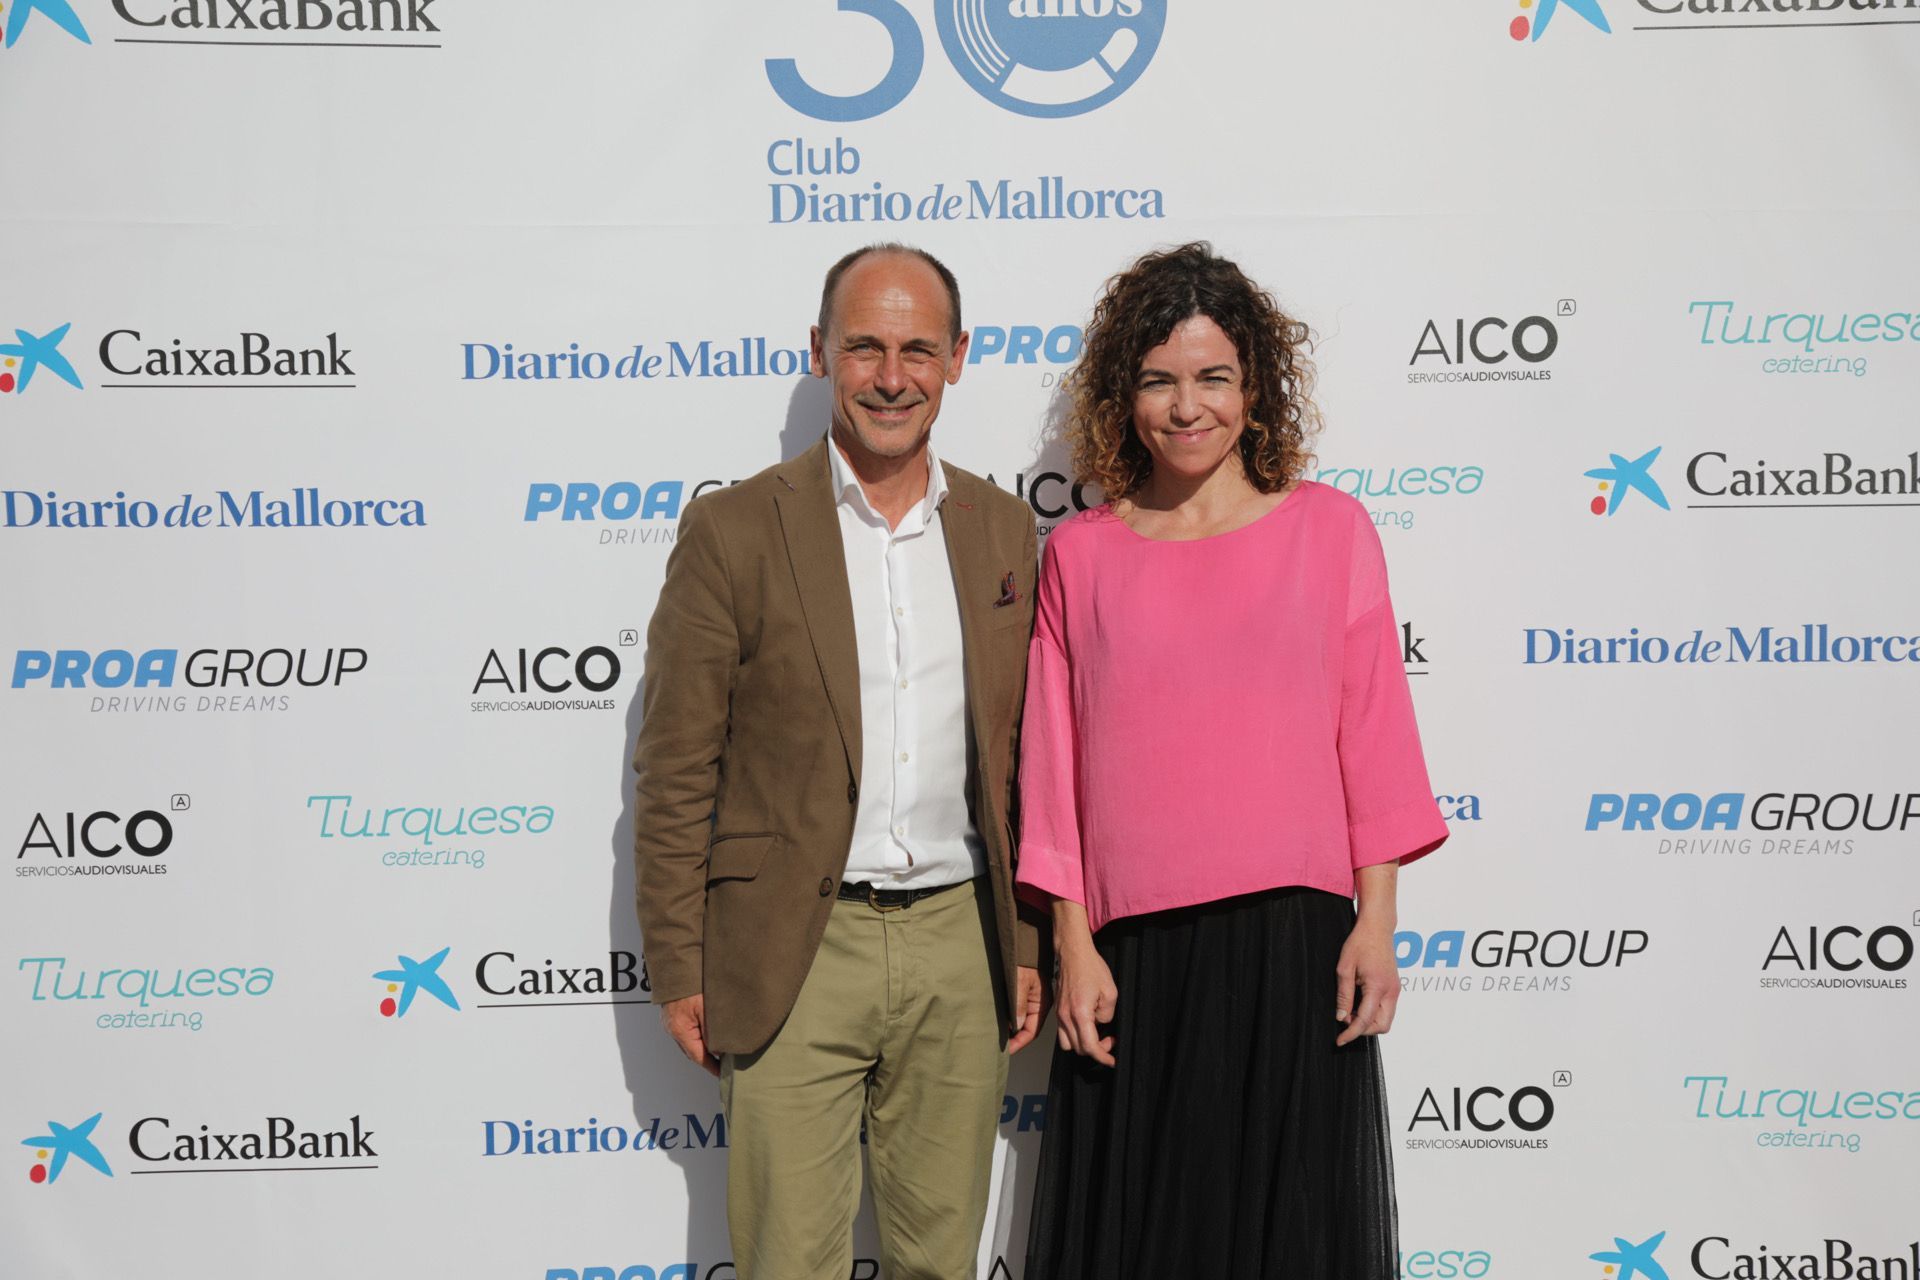 30 aniversario del Club Diario de Mallorca